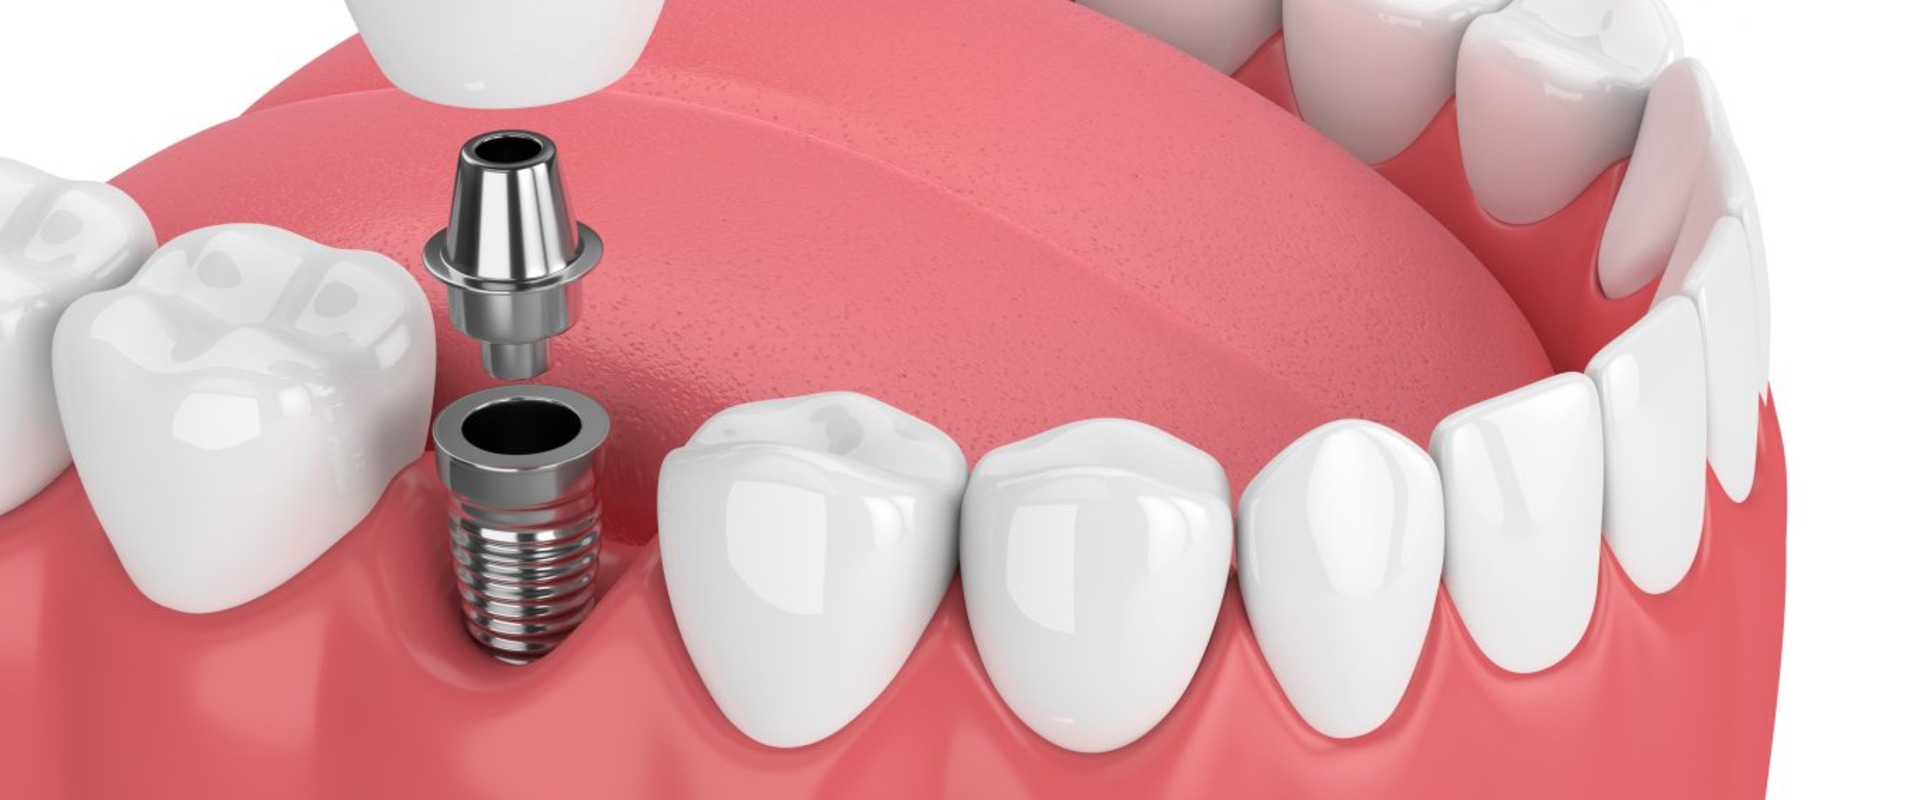 Can dental implants make you sick?